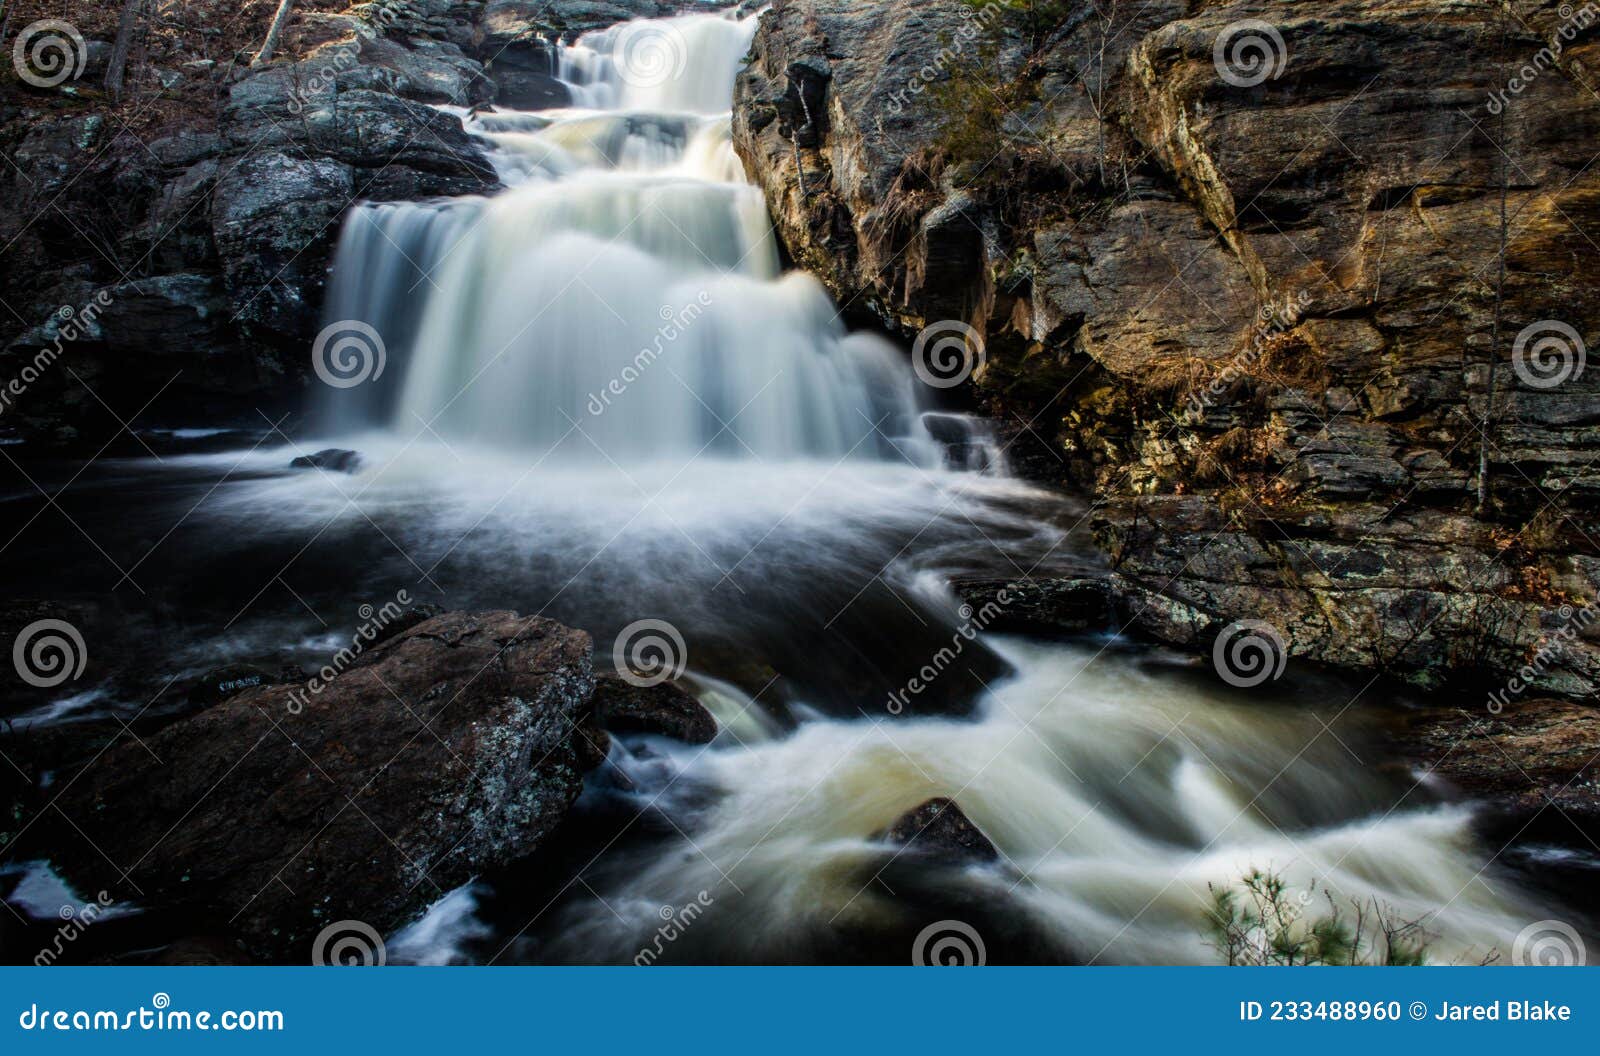 huge and powerful multi tiered waterfall long exposure photo